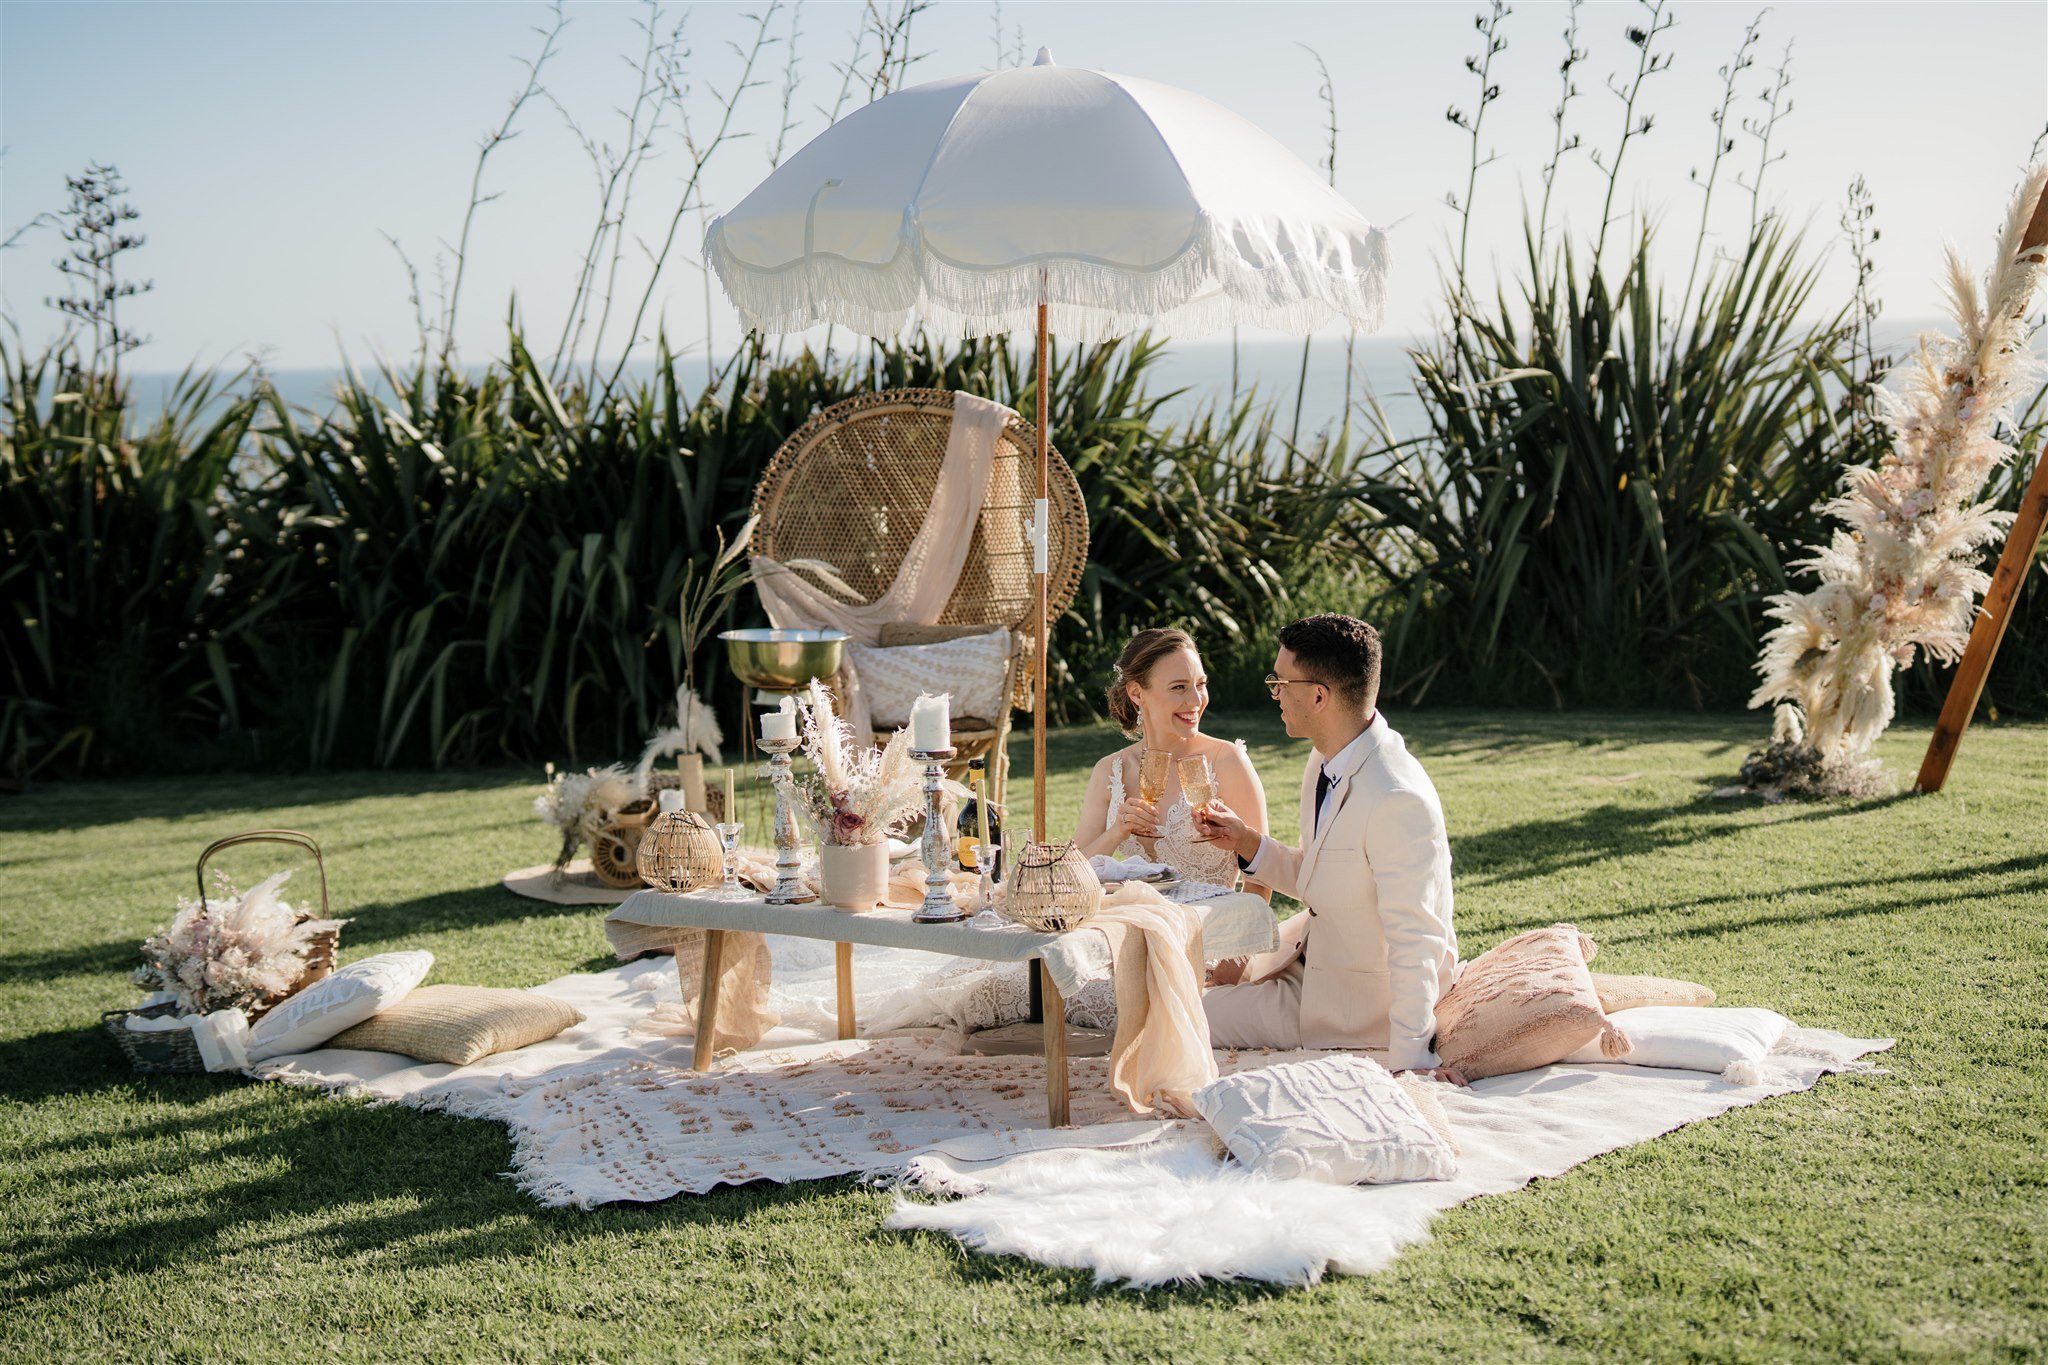 luxury-picnics-decoration-castaways-NZ-new-zealand-auckland-wedding-photographer-photography-videography-film-dear-white-productions-best-venue-waiuku-engagement-elopement-style-beach-intimate  (13).jpg